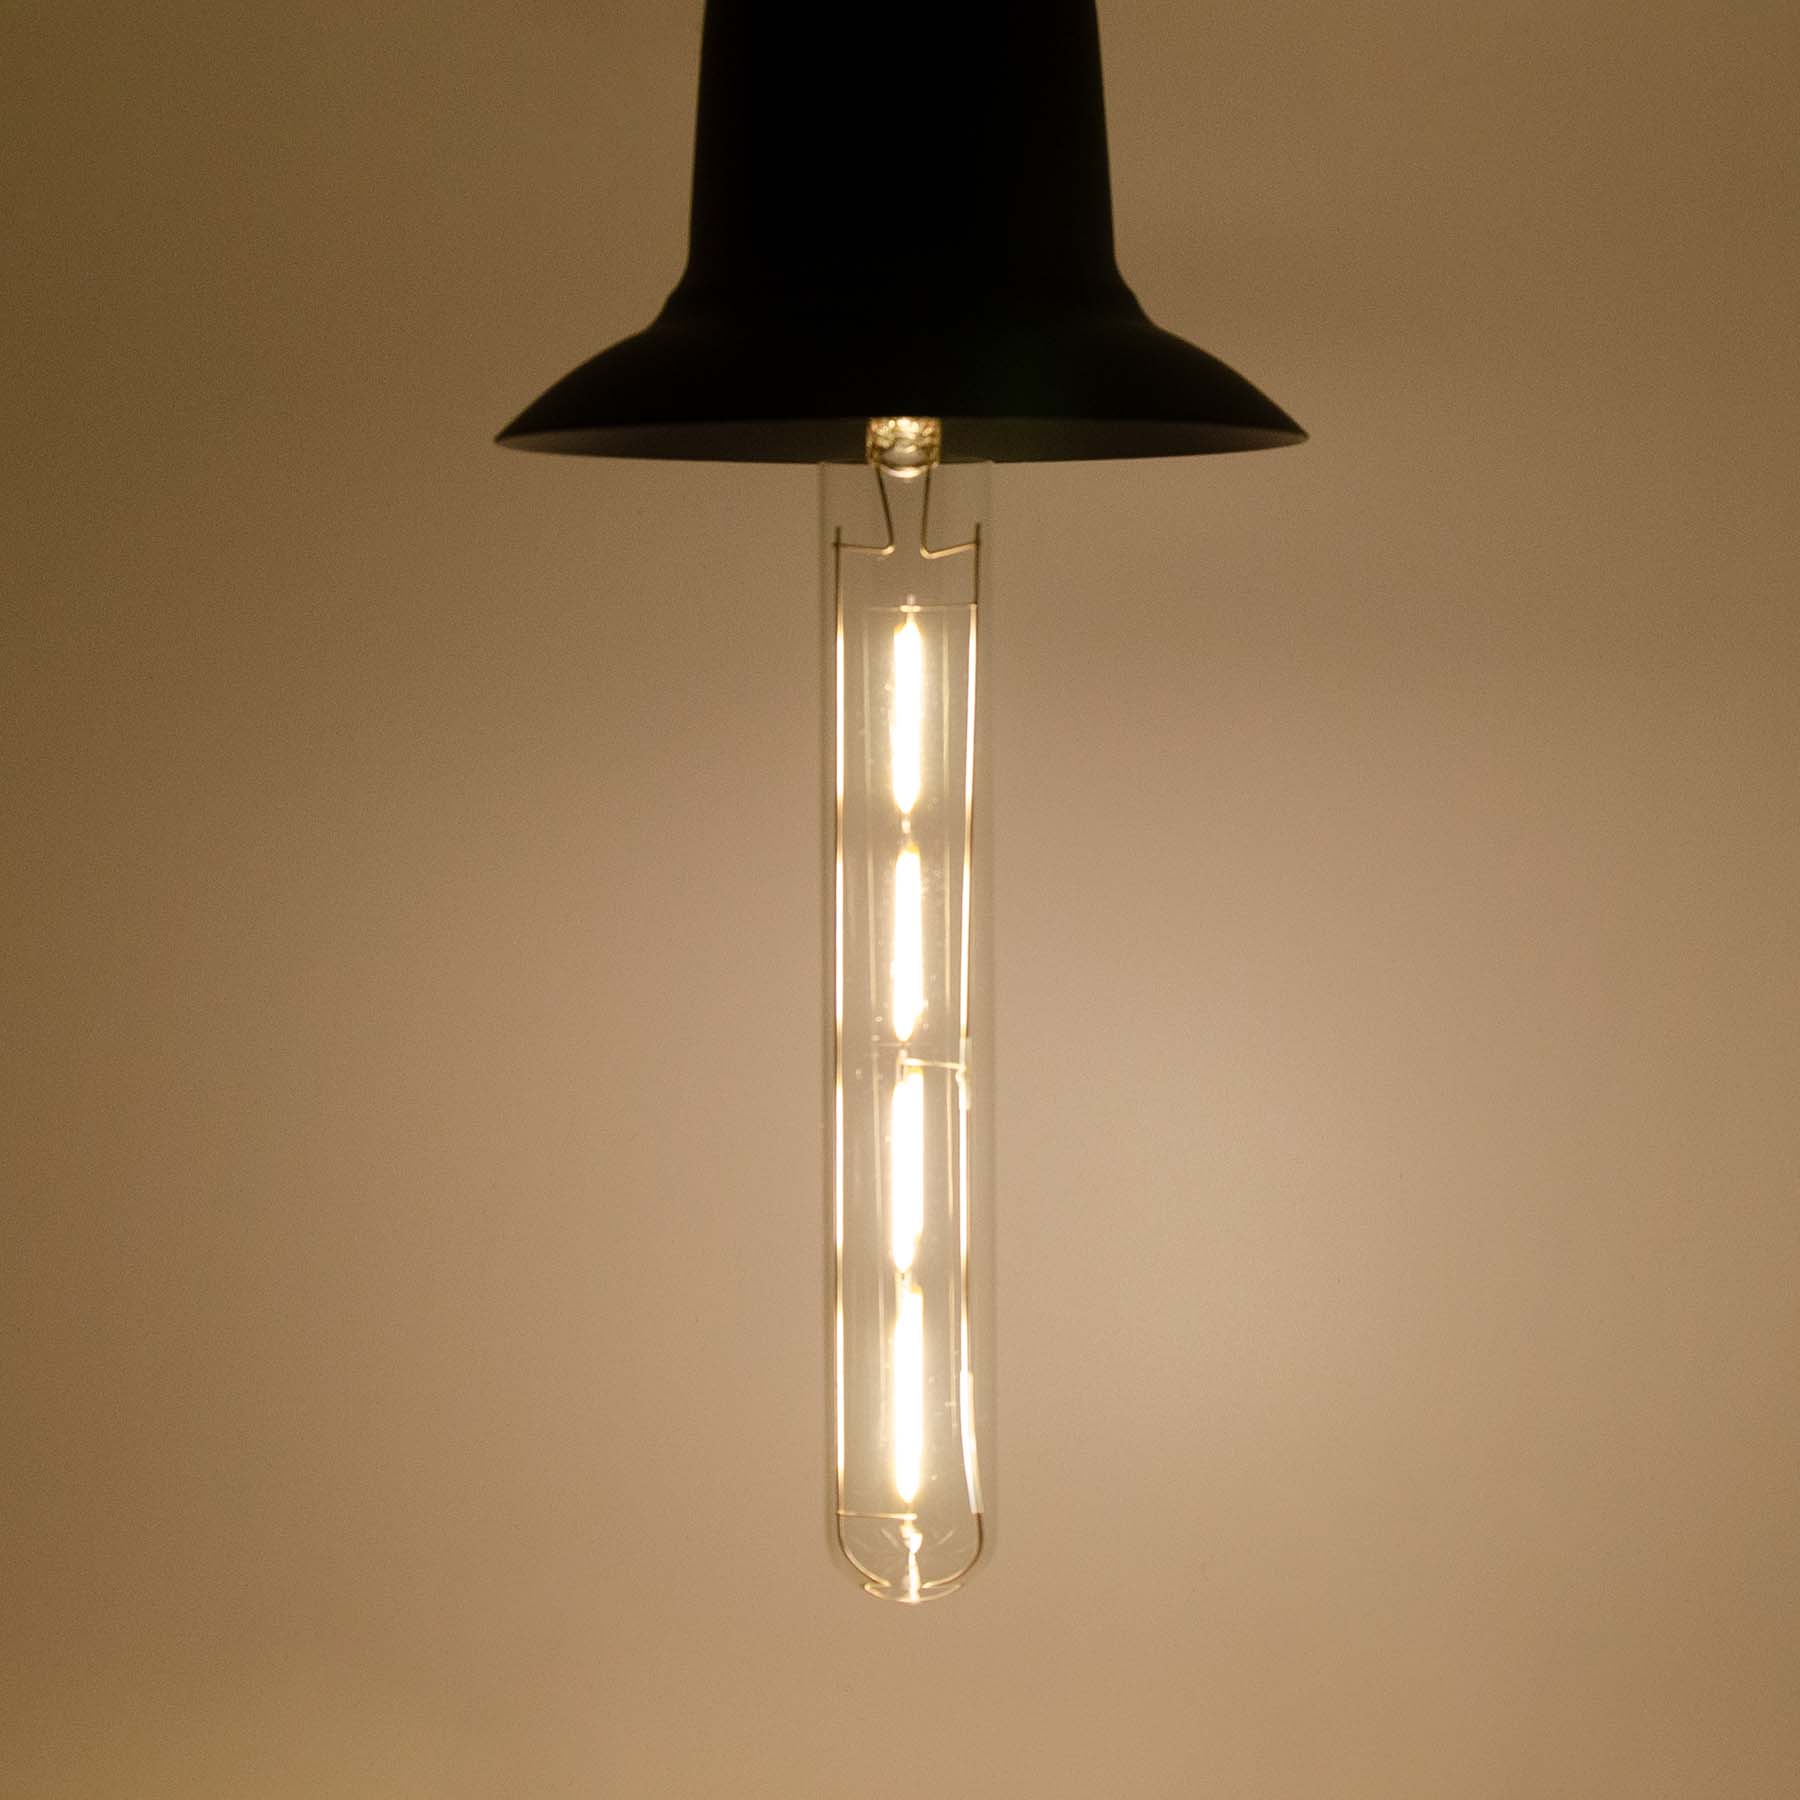 G.W.S LED Wholesale Filament LED Bulbs T30-225 Vintage Style Dimmable E27 4W LED Filament Tubular Light Bulb